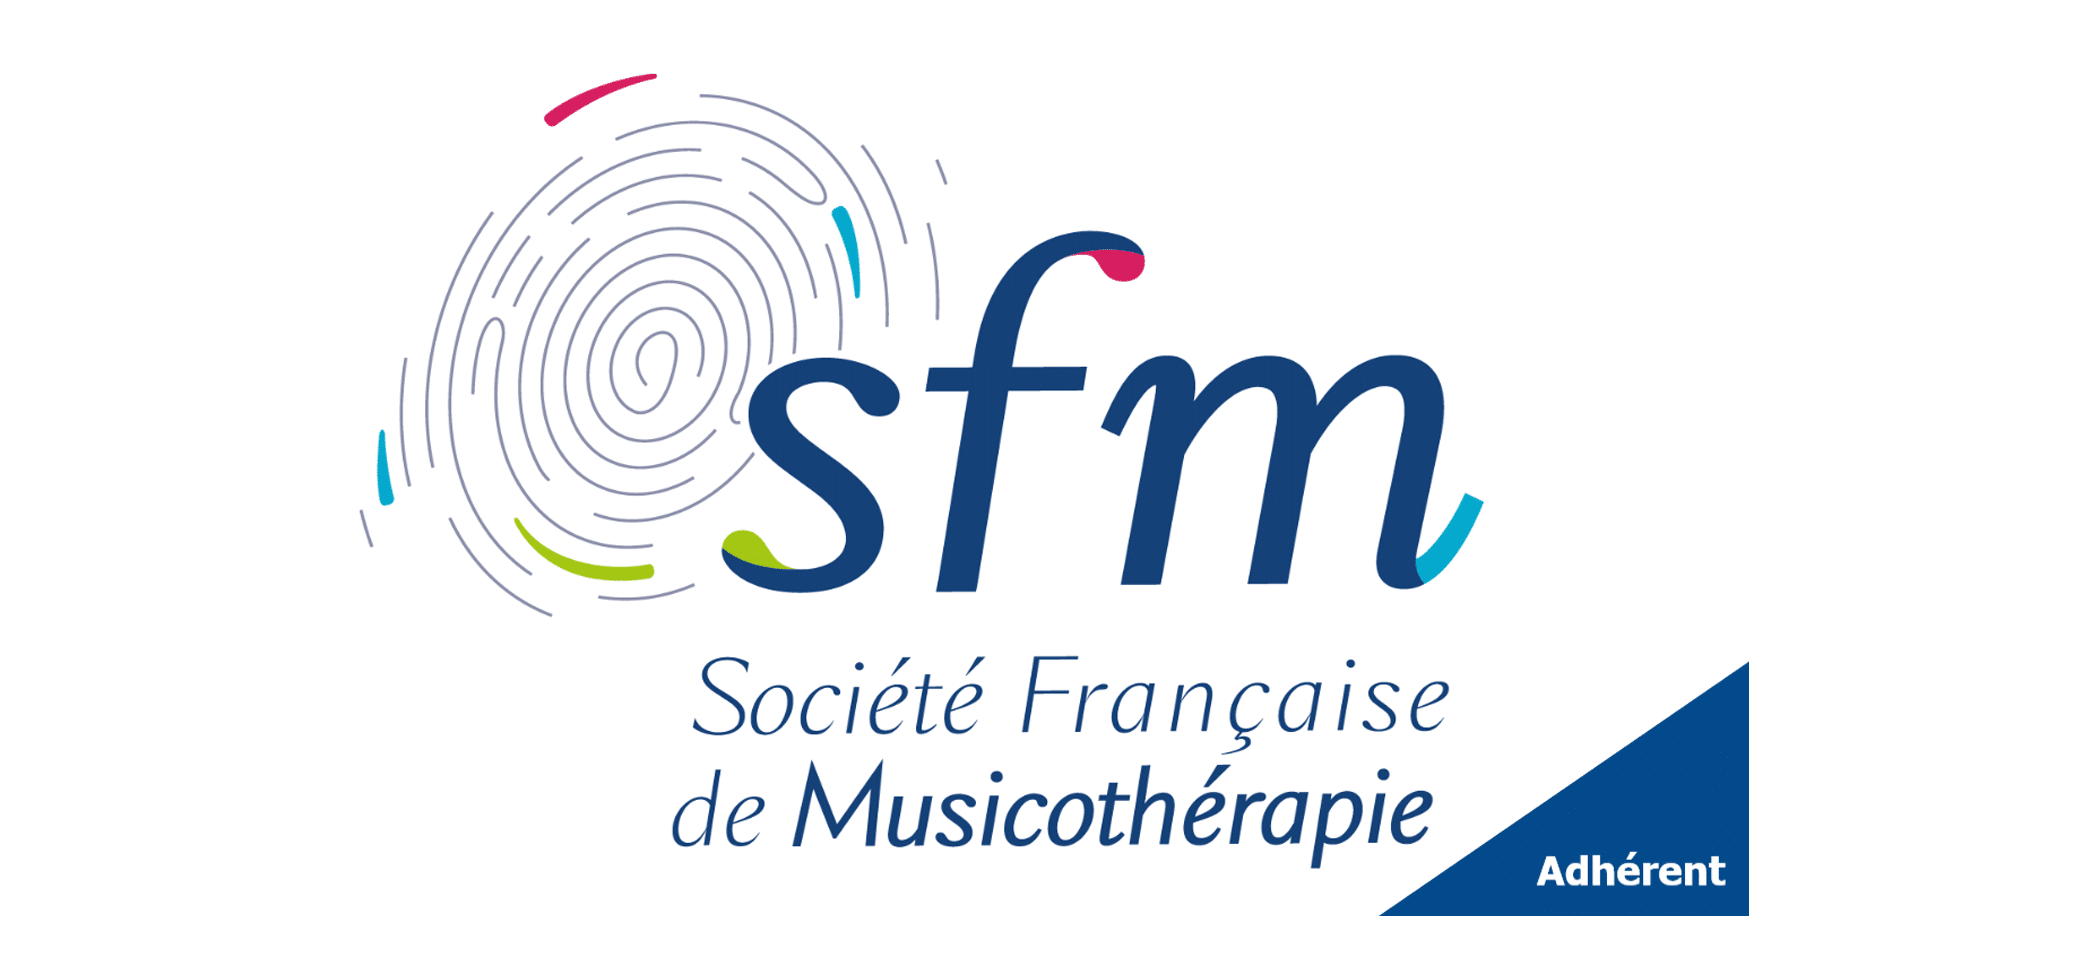 Logo - SFM adhérent h963